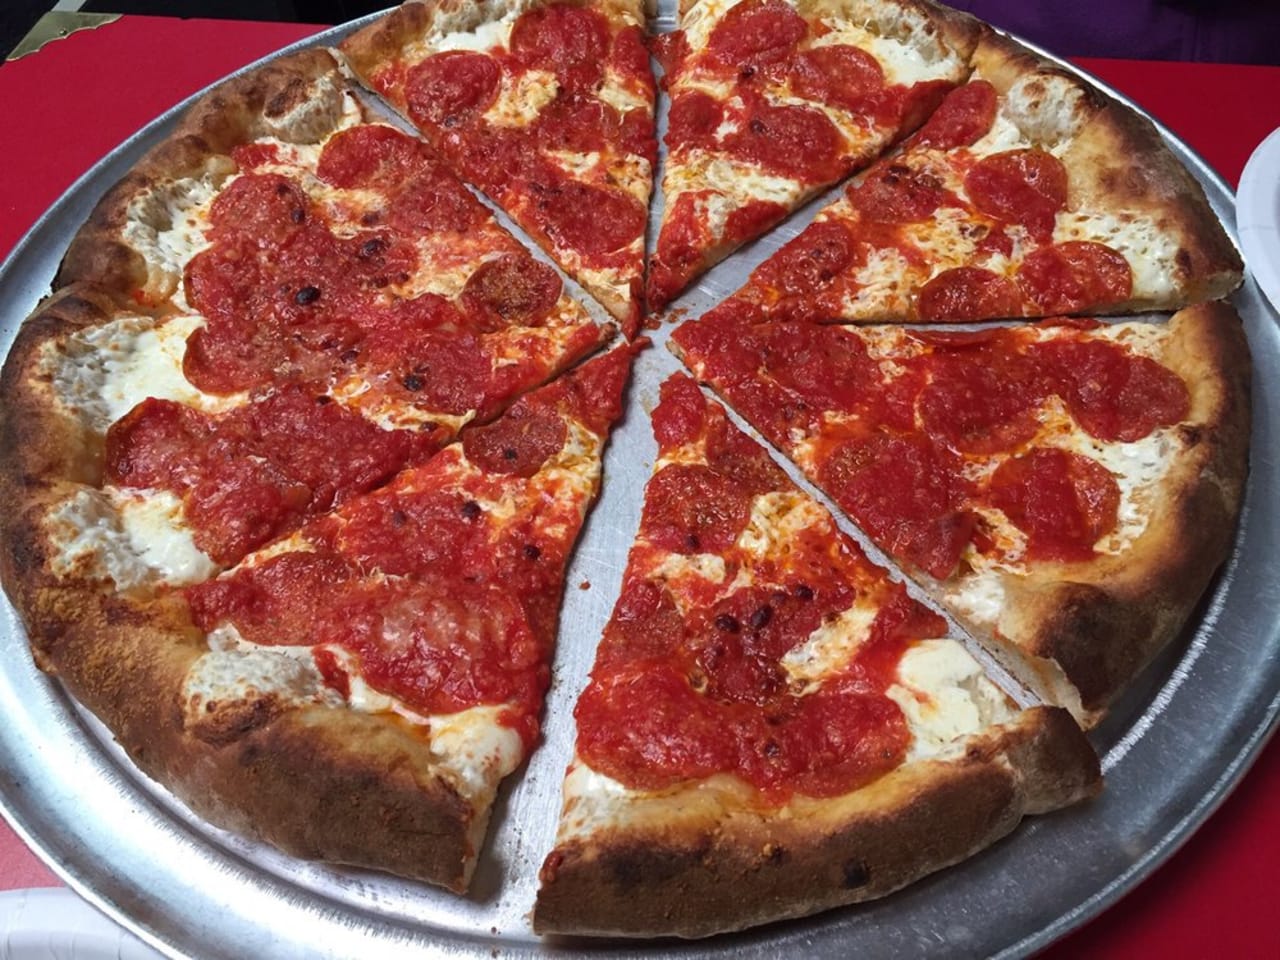 brooklyn style pizza domino